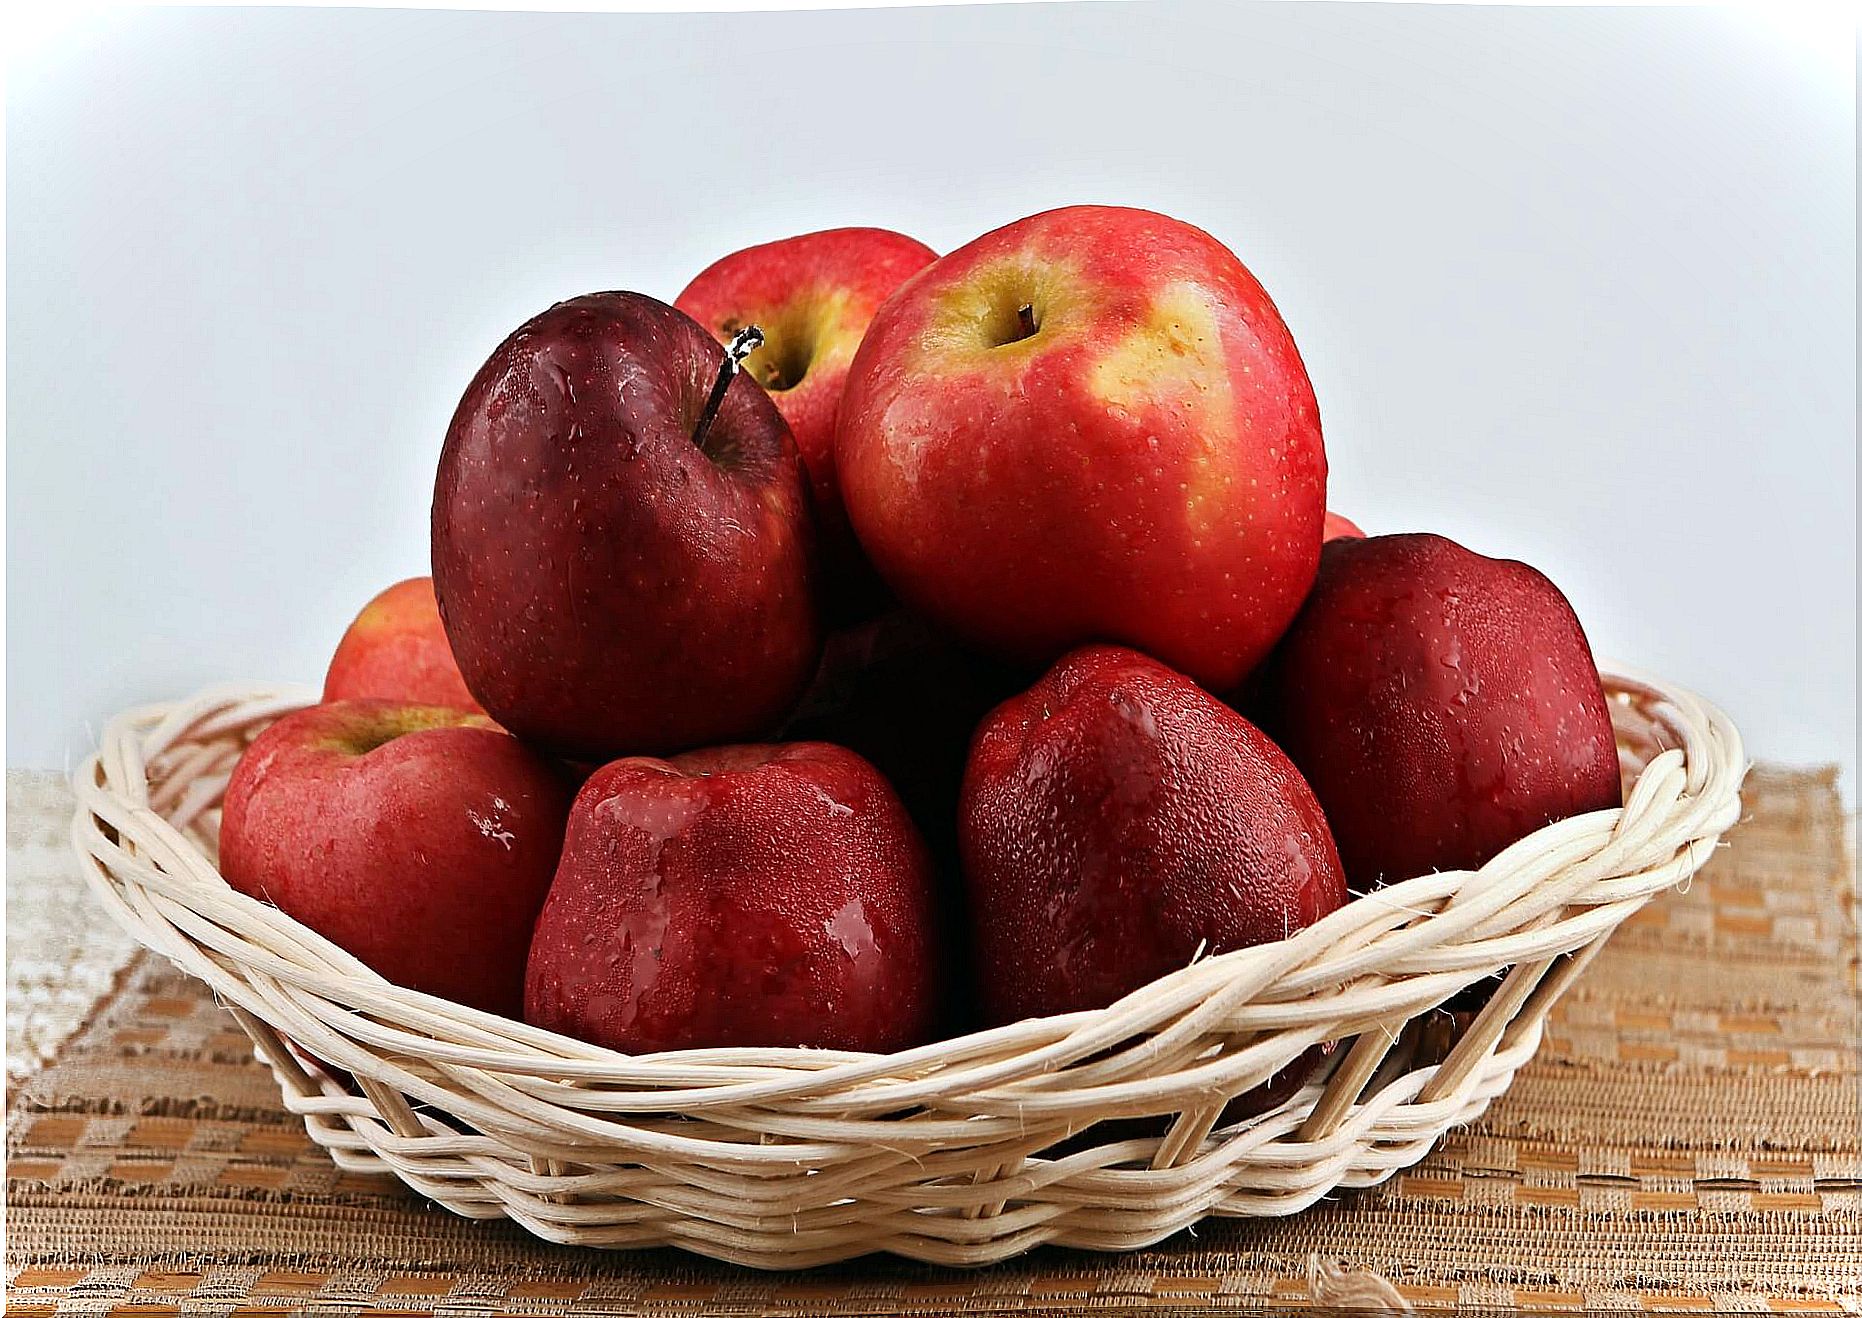 Red apples: fiber for gut health